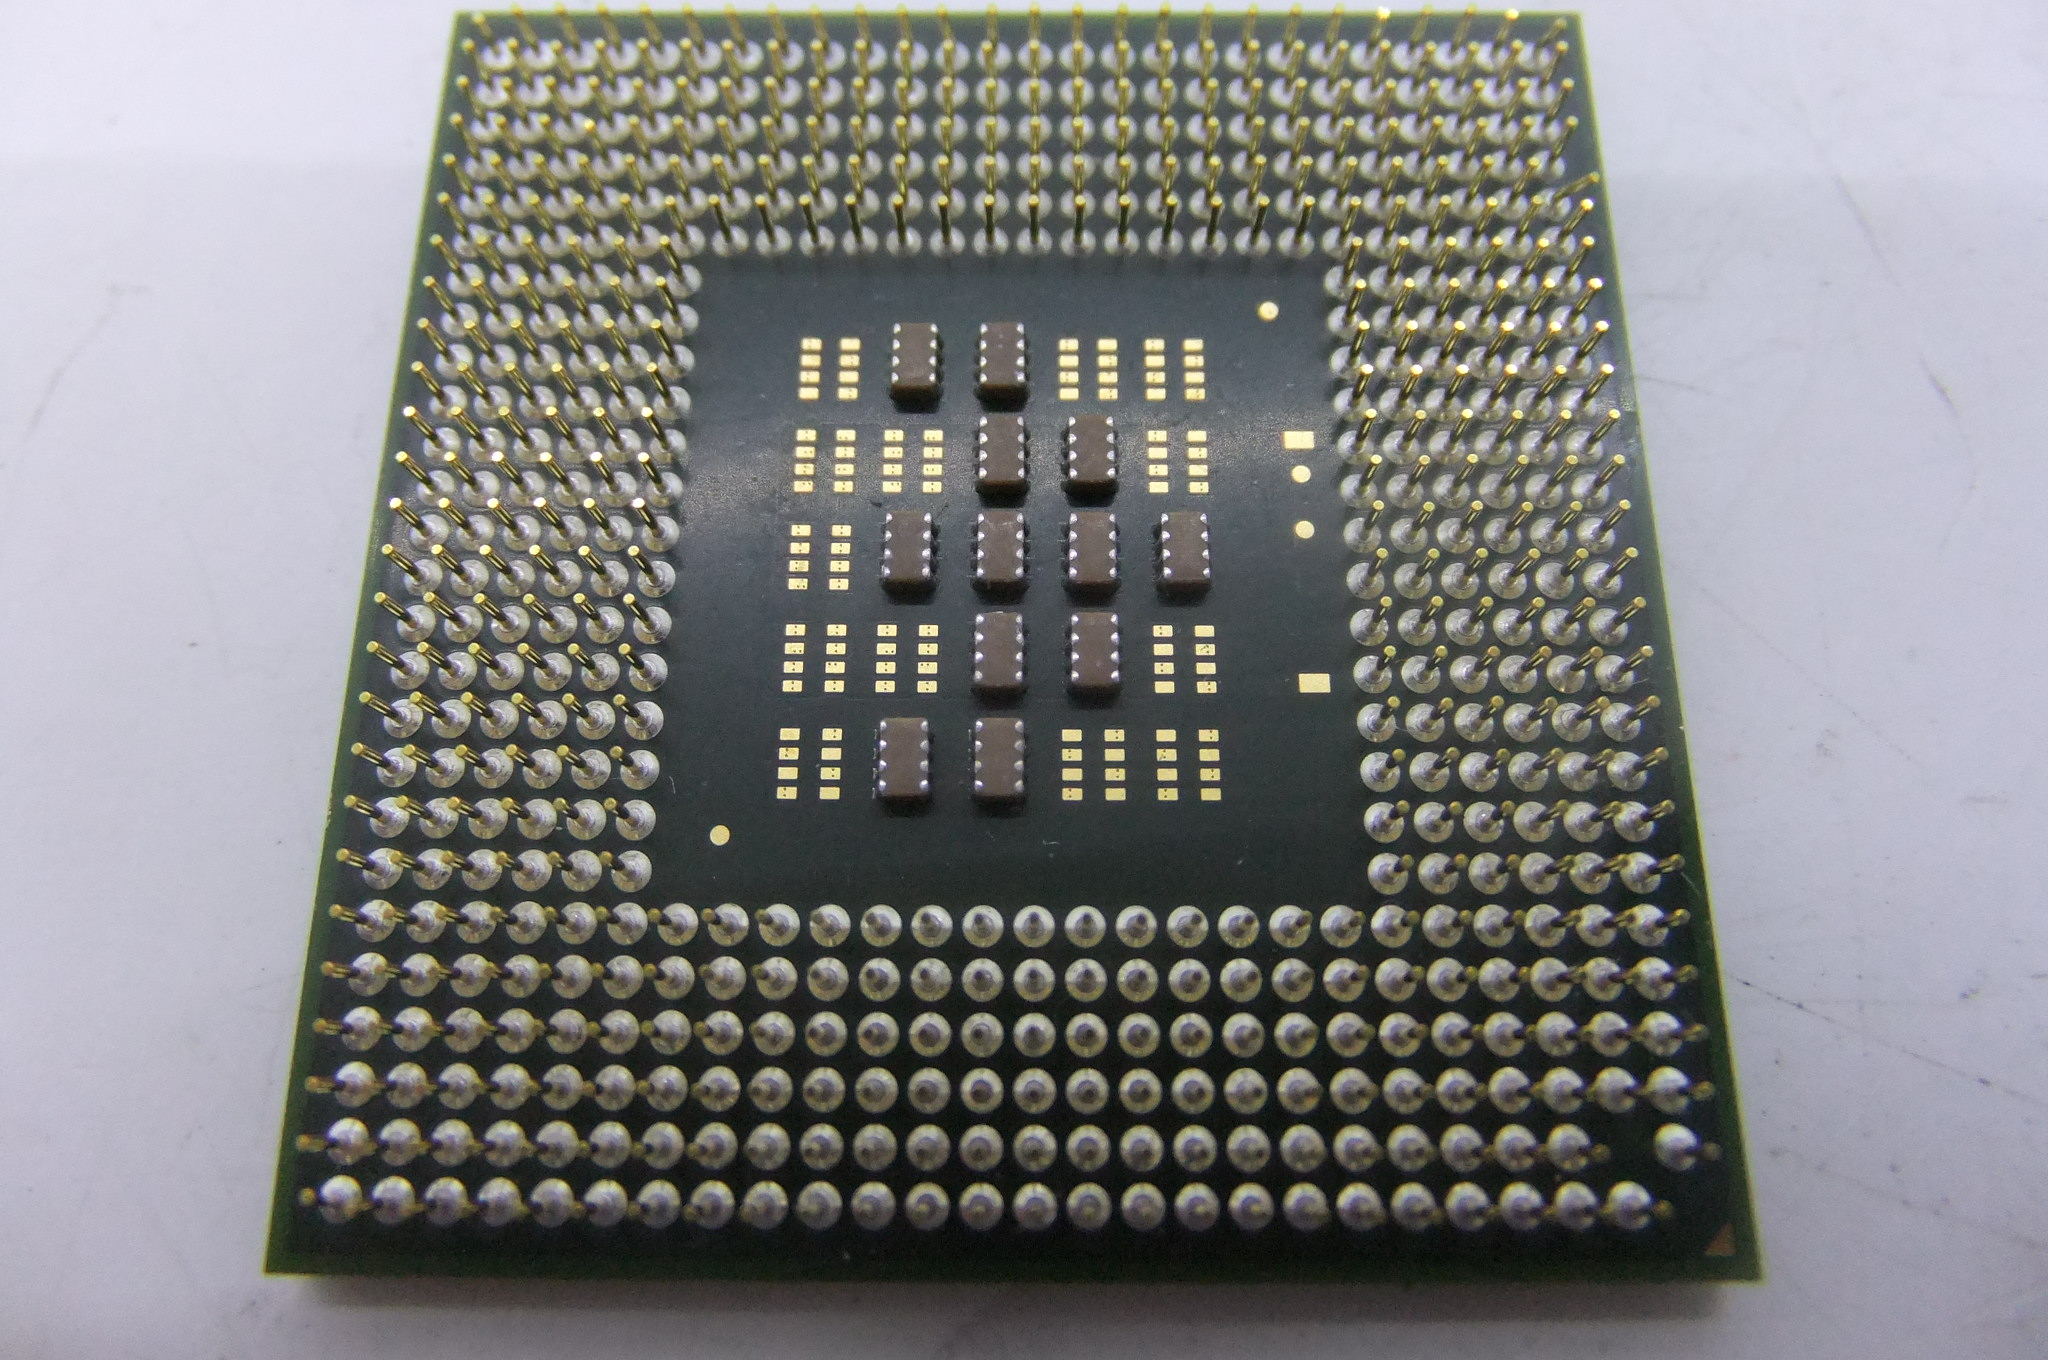 Сокет процессора intel core 2. Процессор для ноутбука Socket 478 Intel Core 2 Duo. 775 Сокет Интел. Интел 775 сокет процессоры. Intel Core 2 Duo mobile t5250.